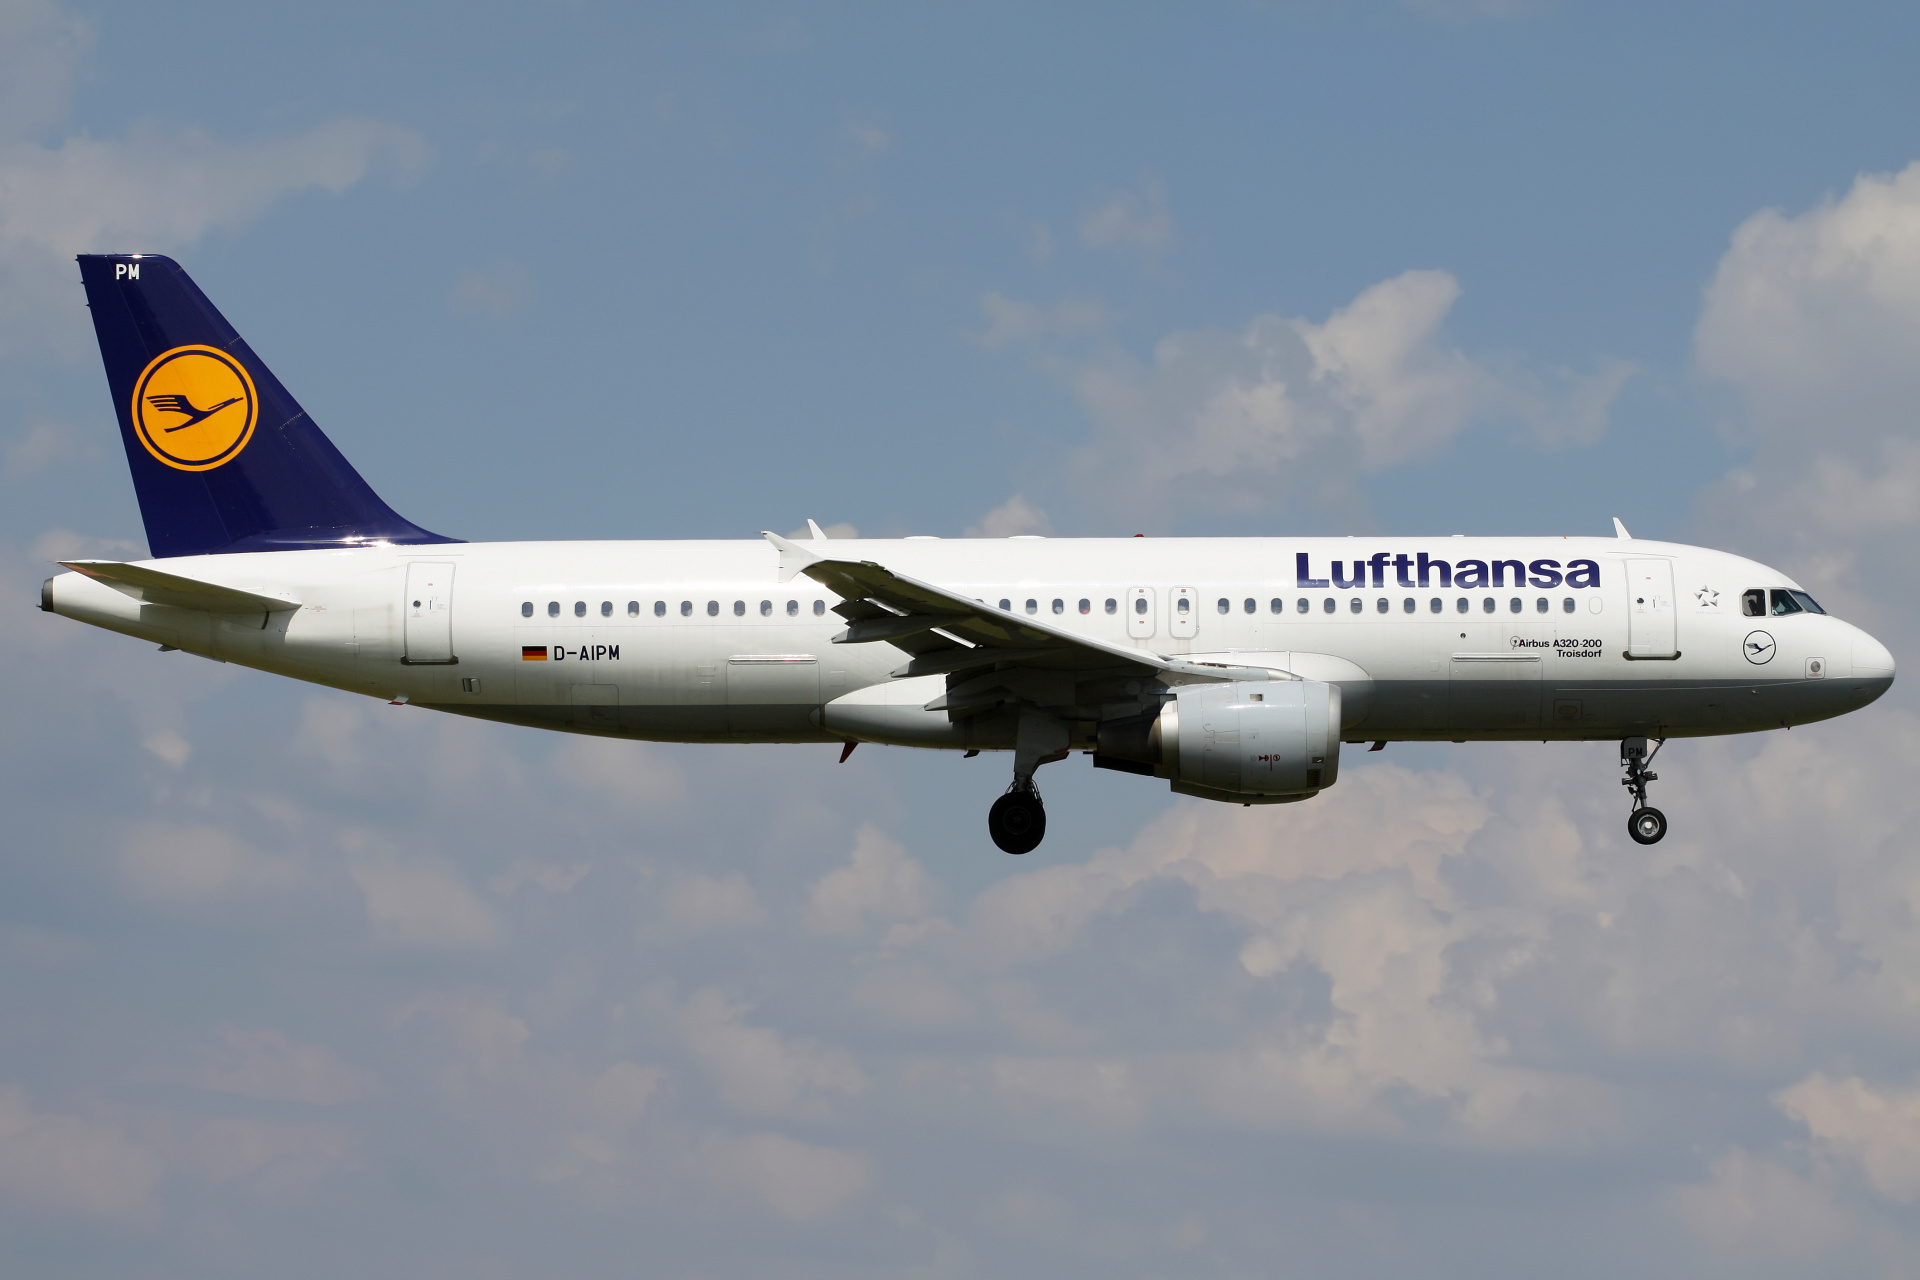 D-AIPM (Aircraft » EPWA Spotting » Airbus A320-200 » Lufthansa)